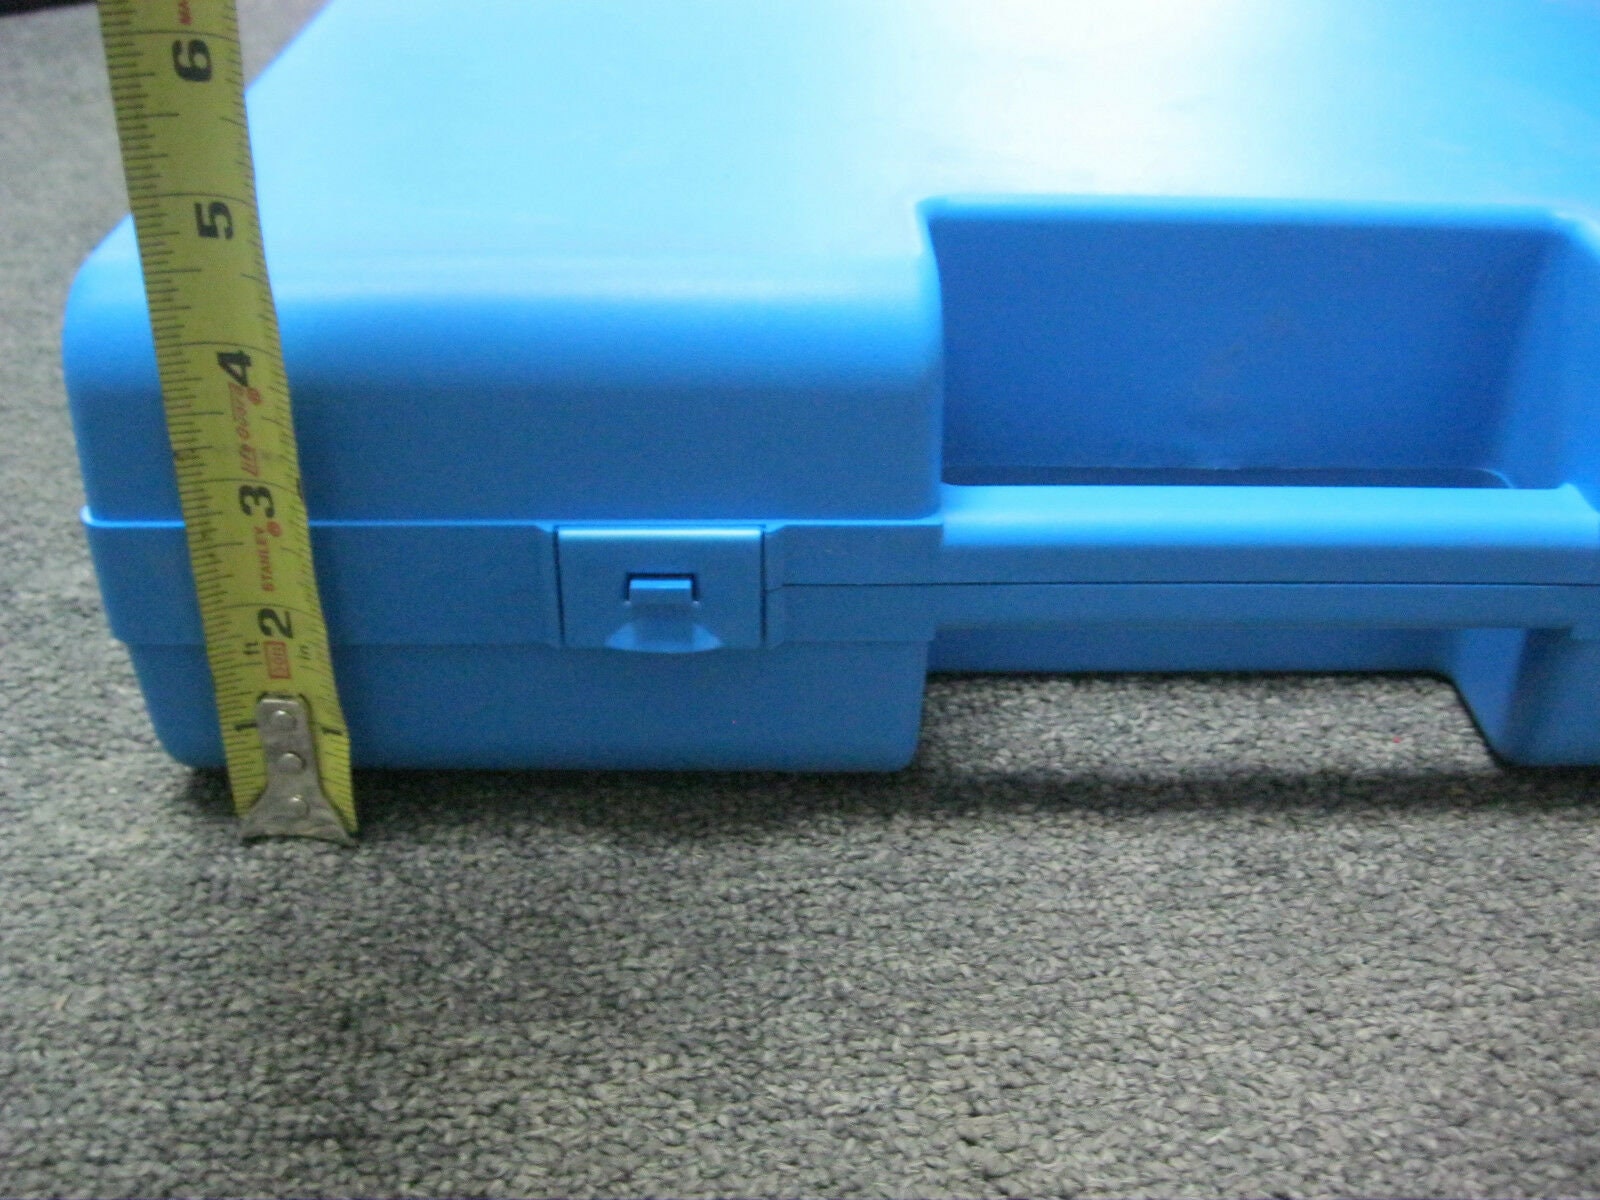 Plastic Carrying Case artist Case briefcase storage Box Please